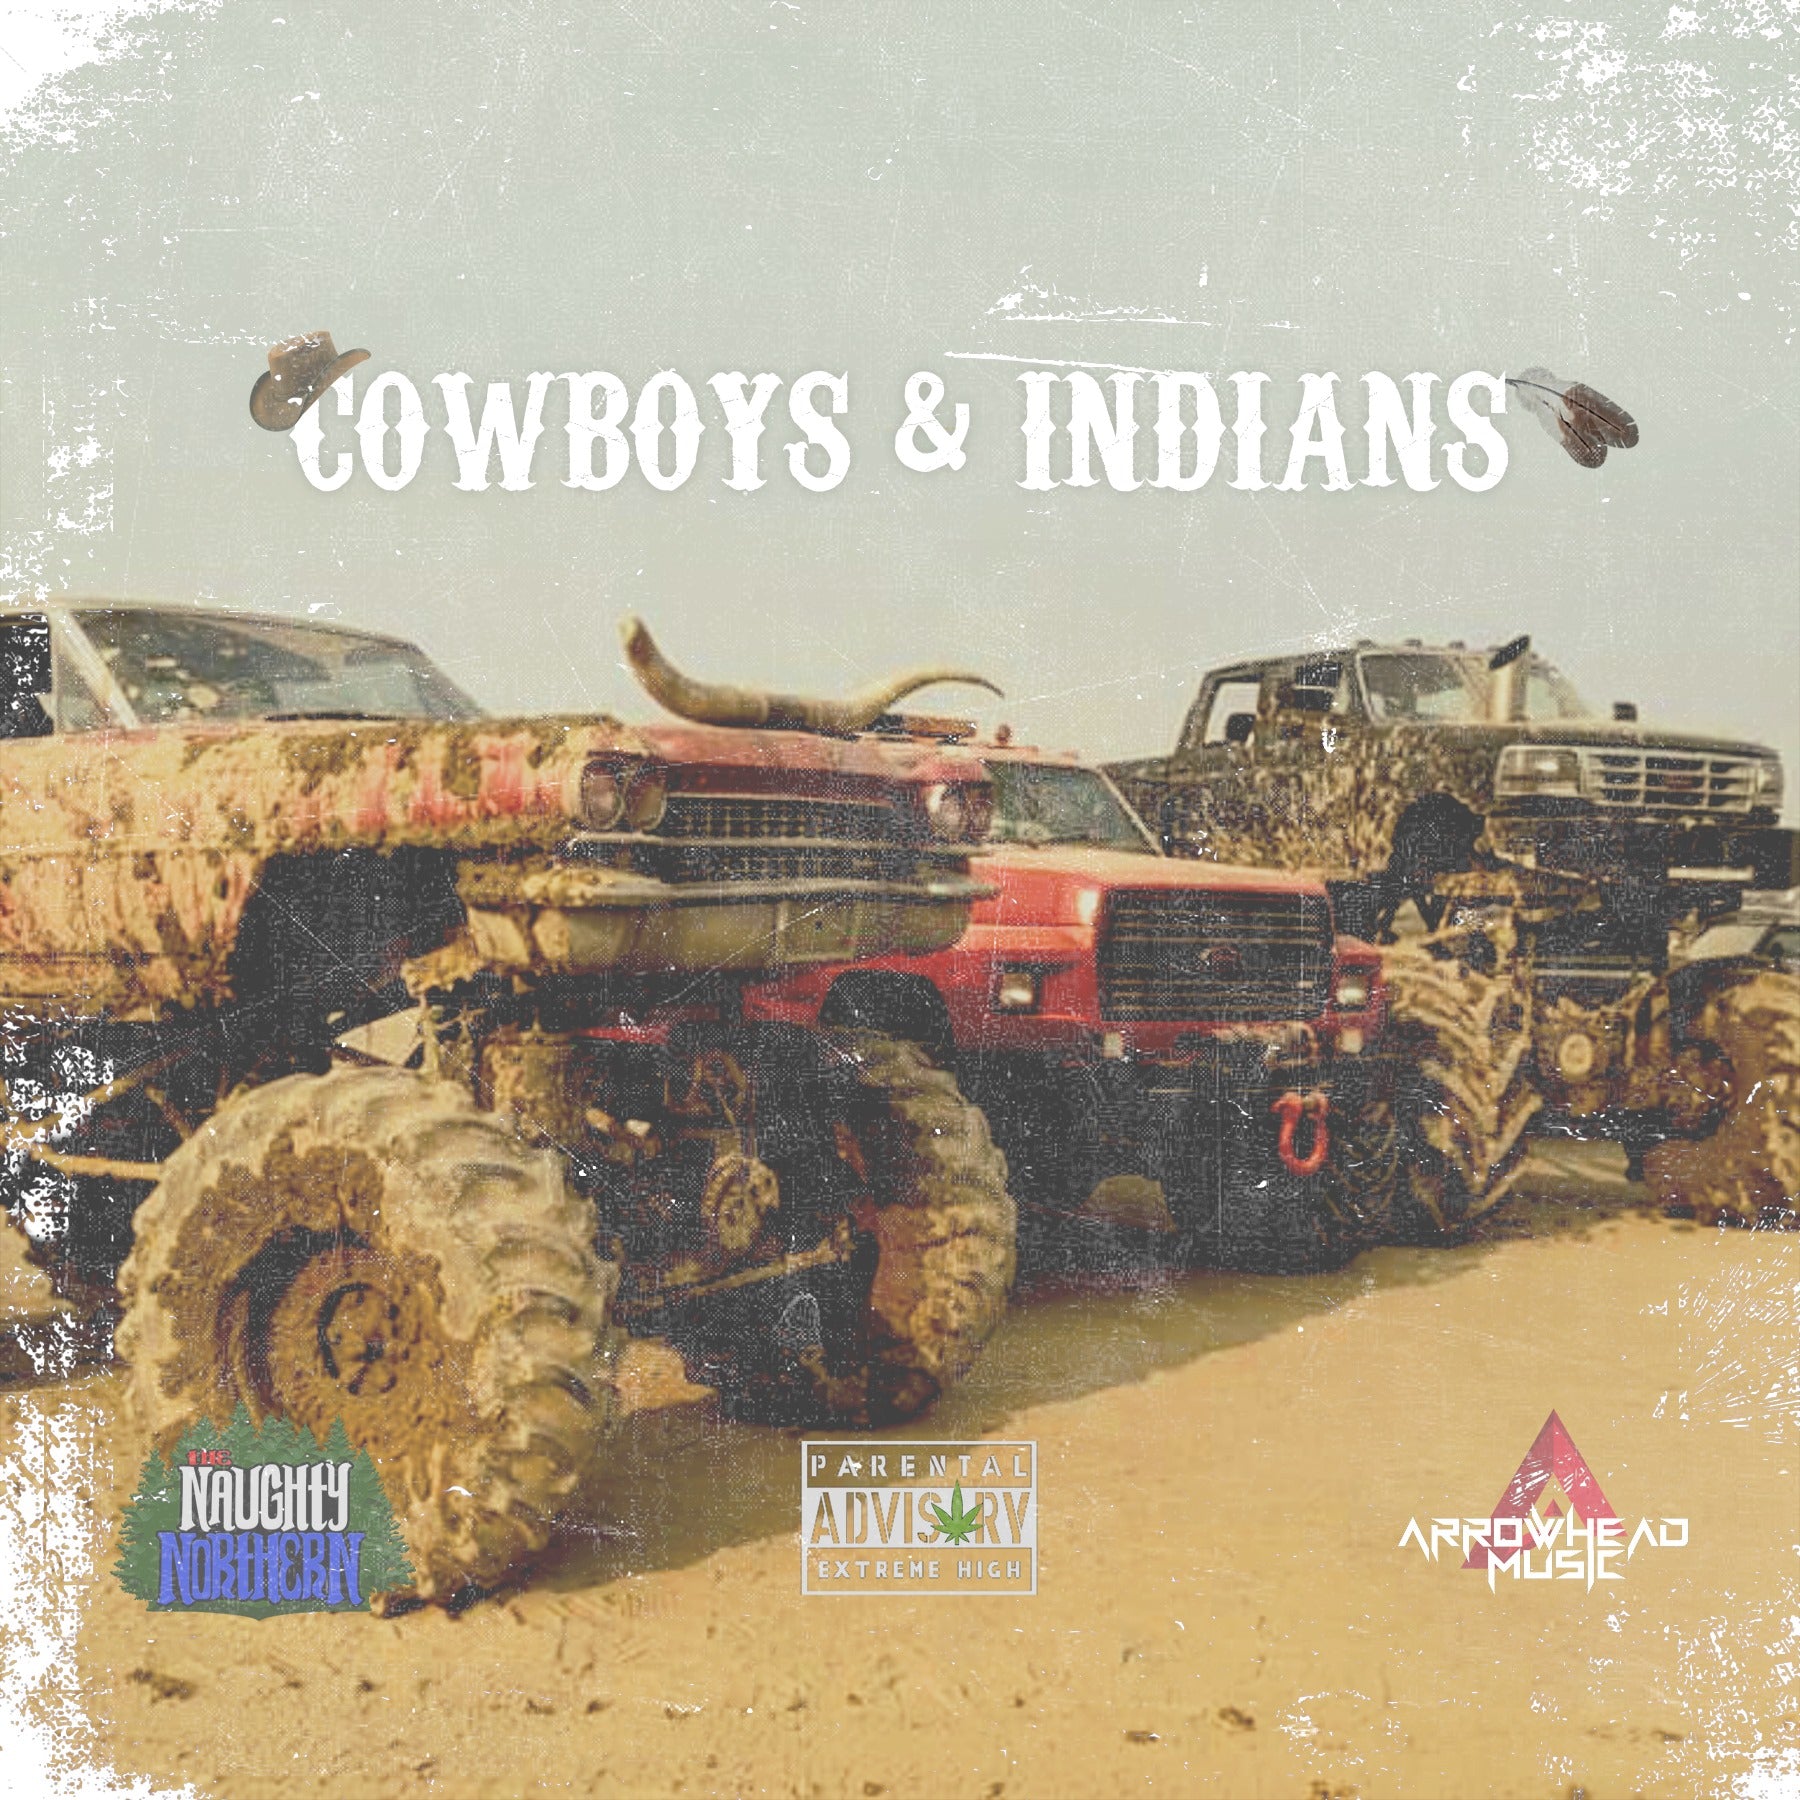 "Cowboy's & Indian's" - The Naughty Northern X Arrowhead CD